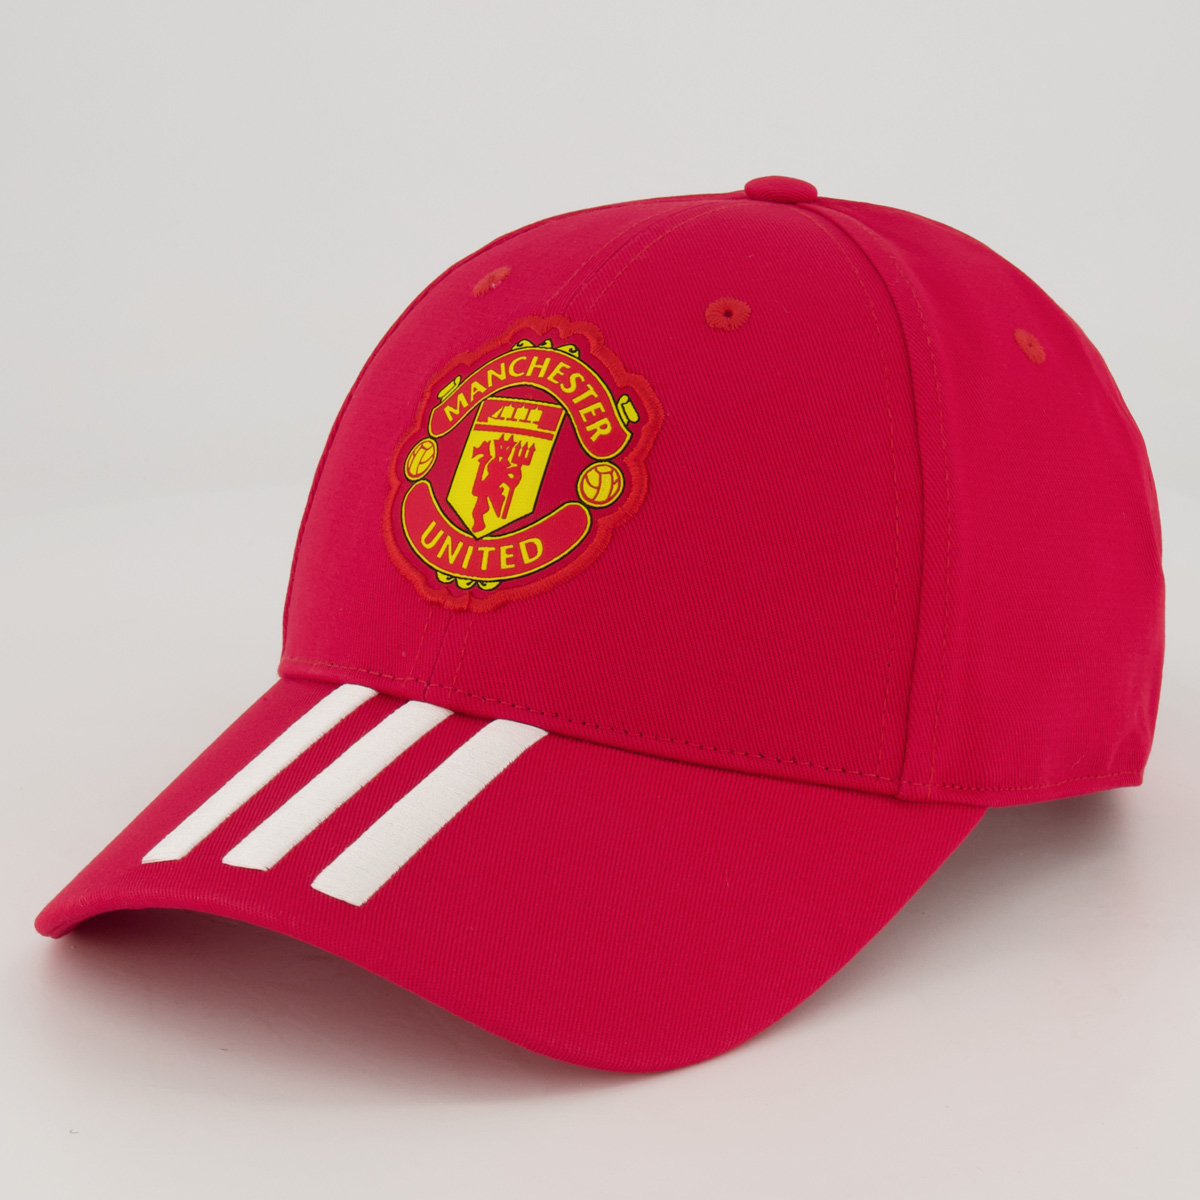 Red Devils Manchester United English Premier Soccer Futbol Hat Cap Clip Buckle 